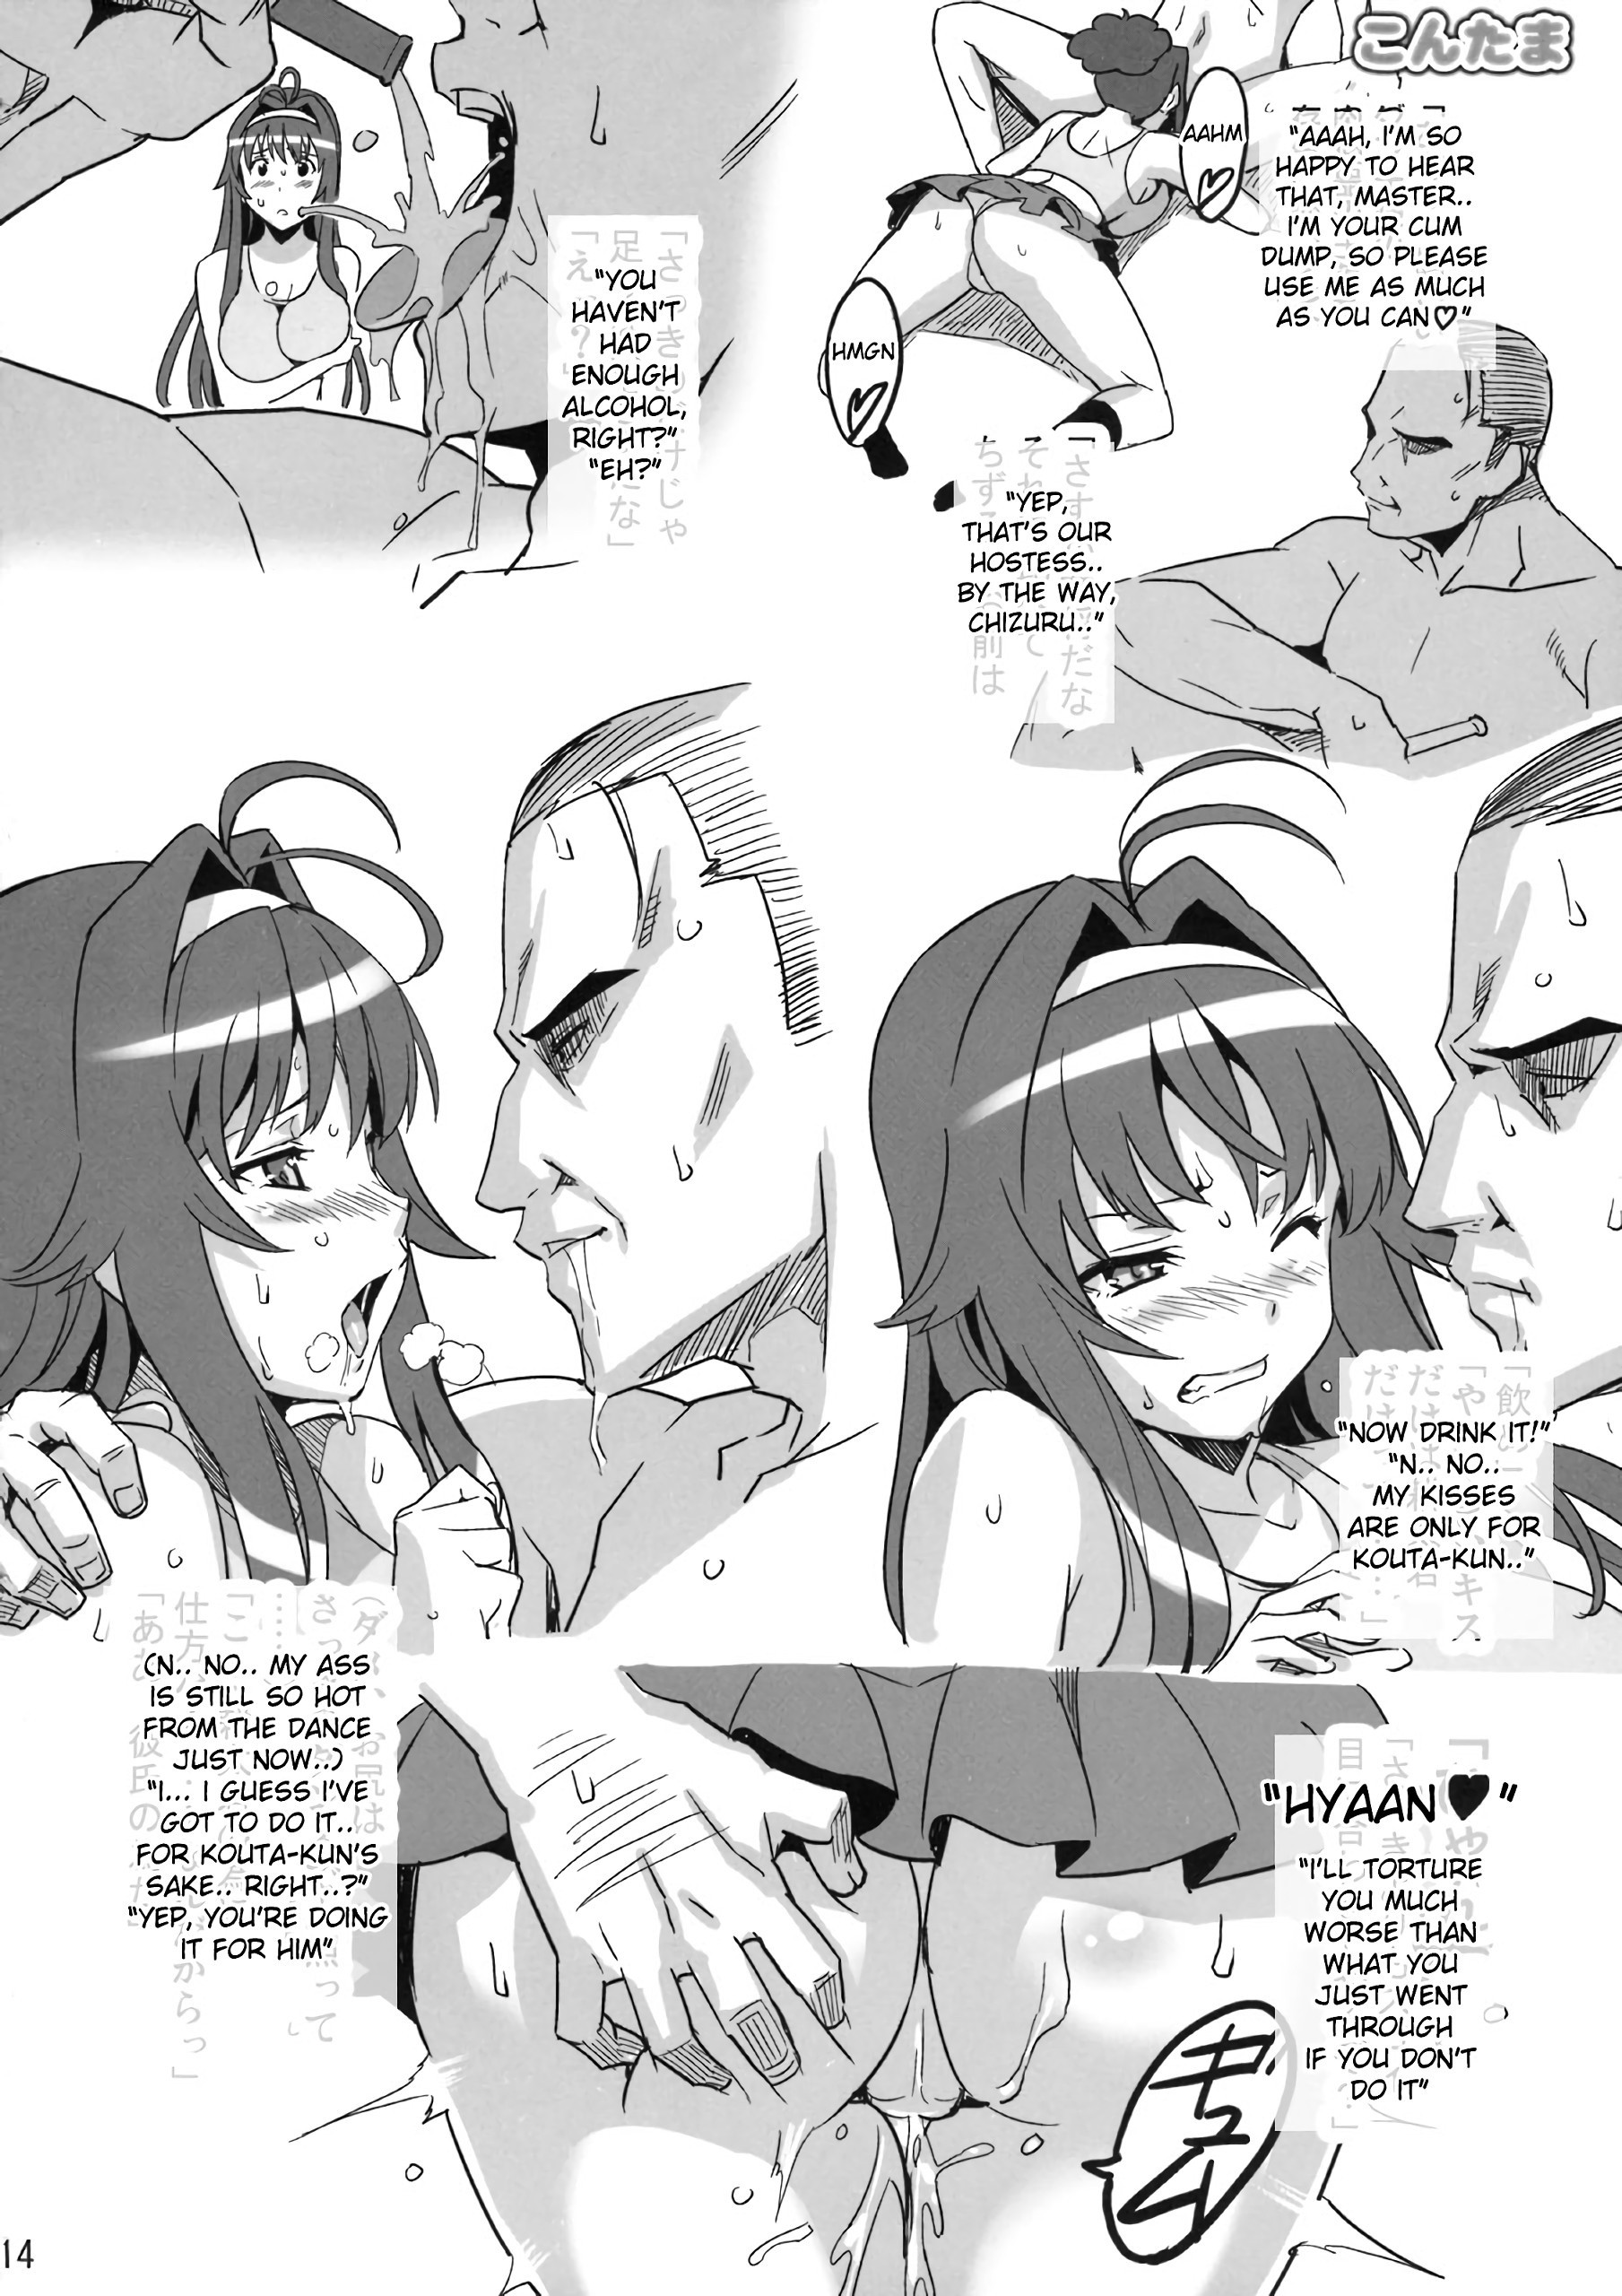 Kontama Plus hentai manga picture 11